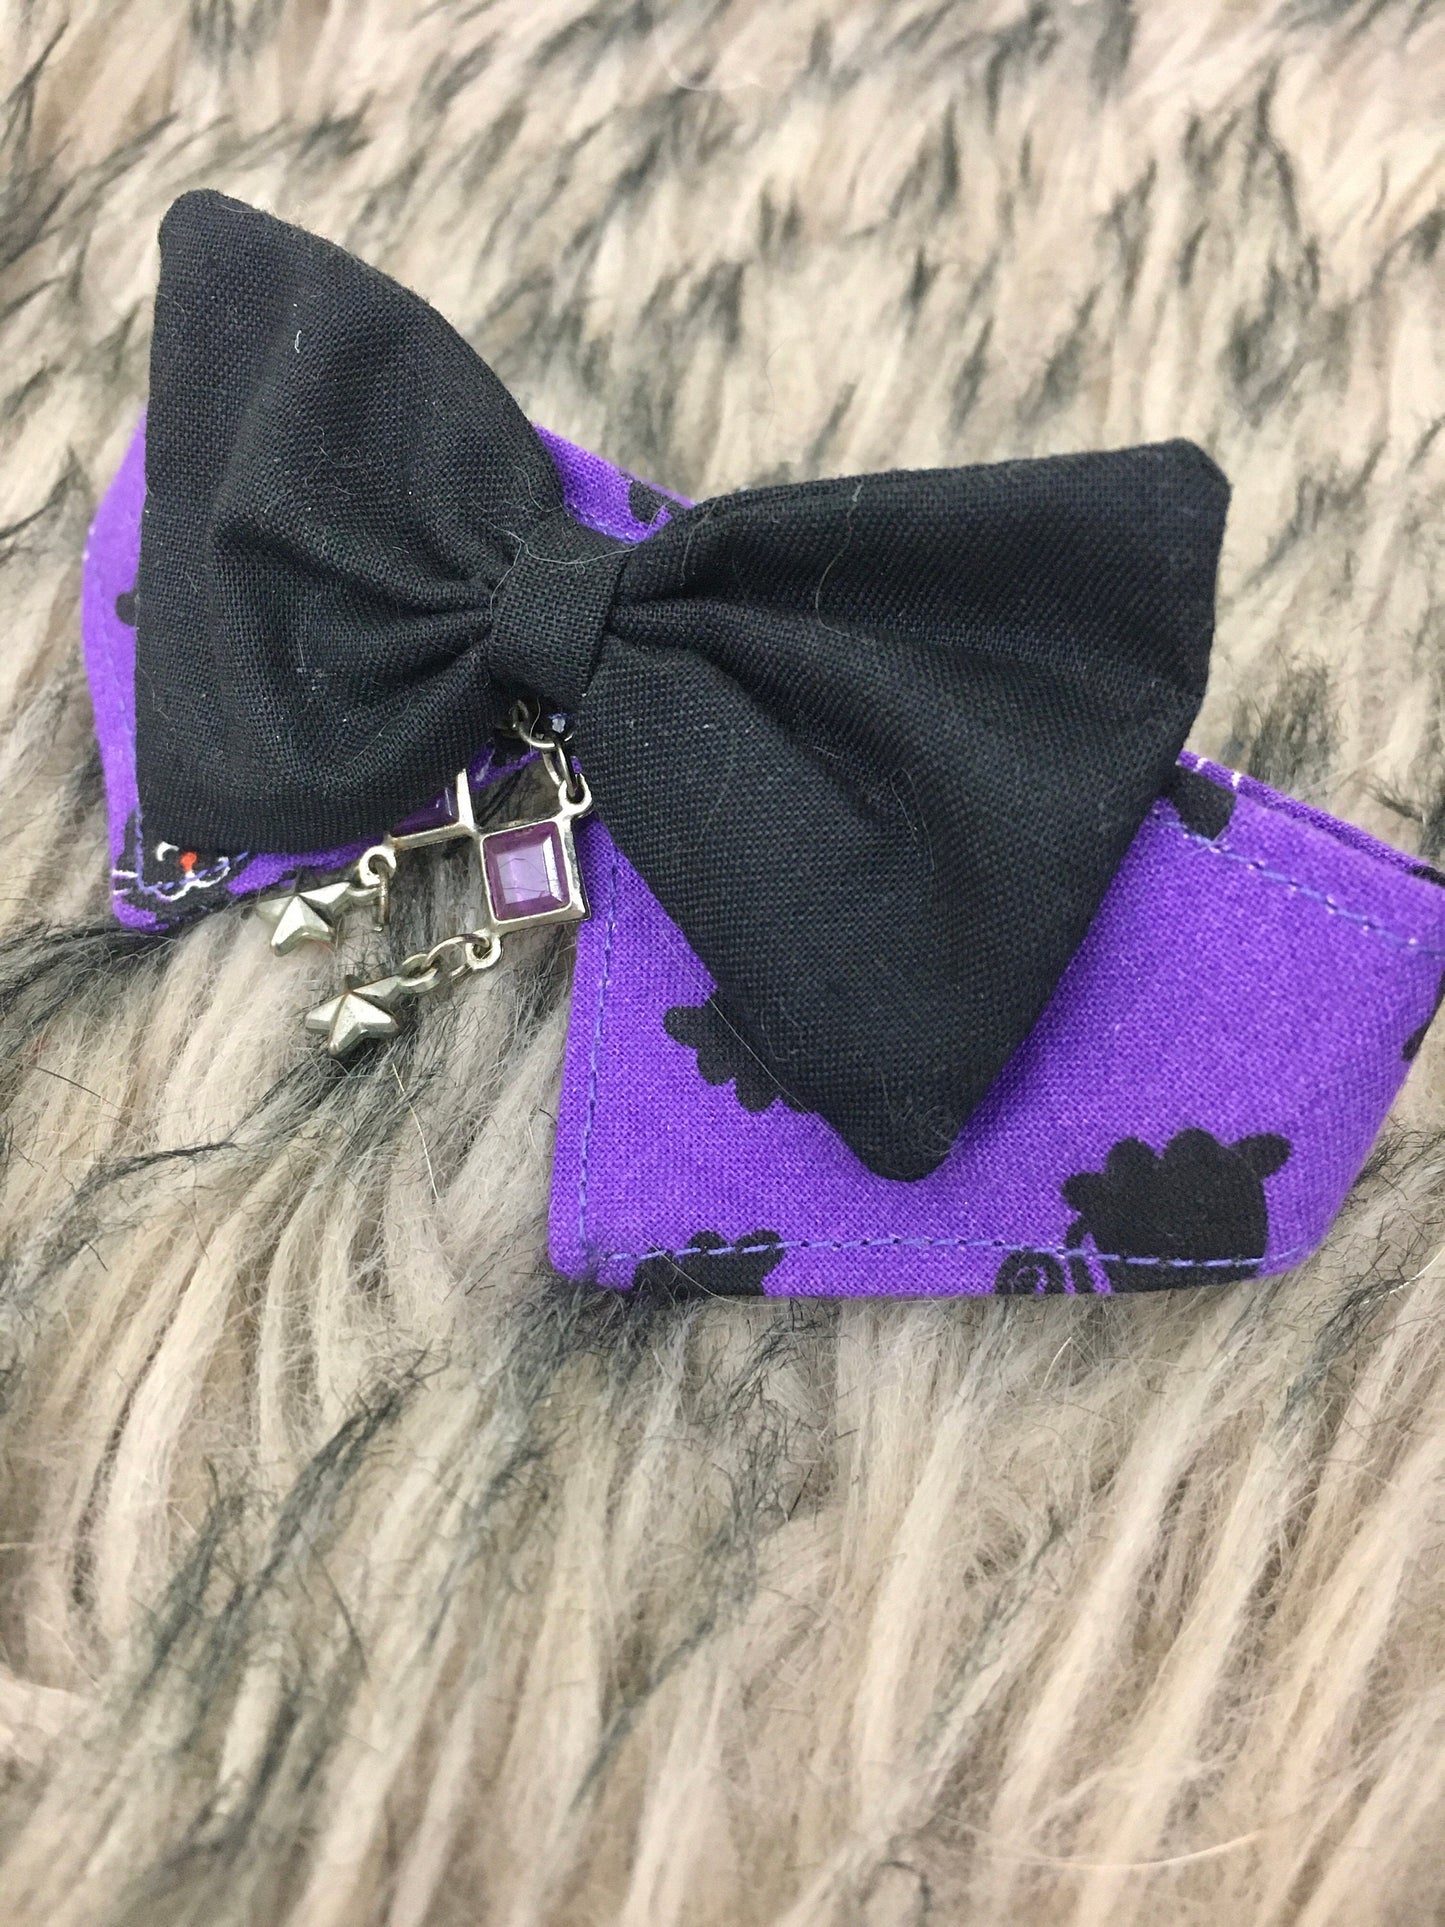 Purple Adjustable Cat Bowtie Collar